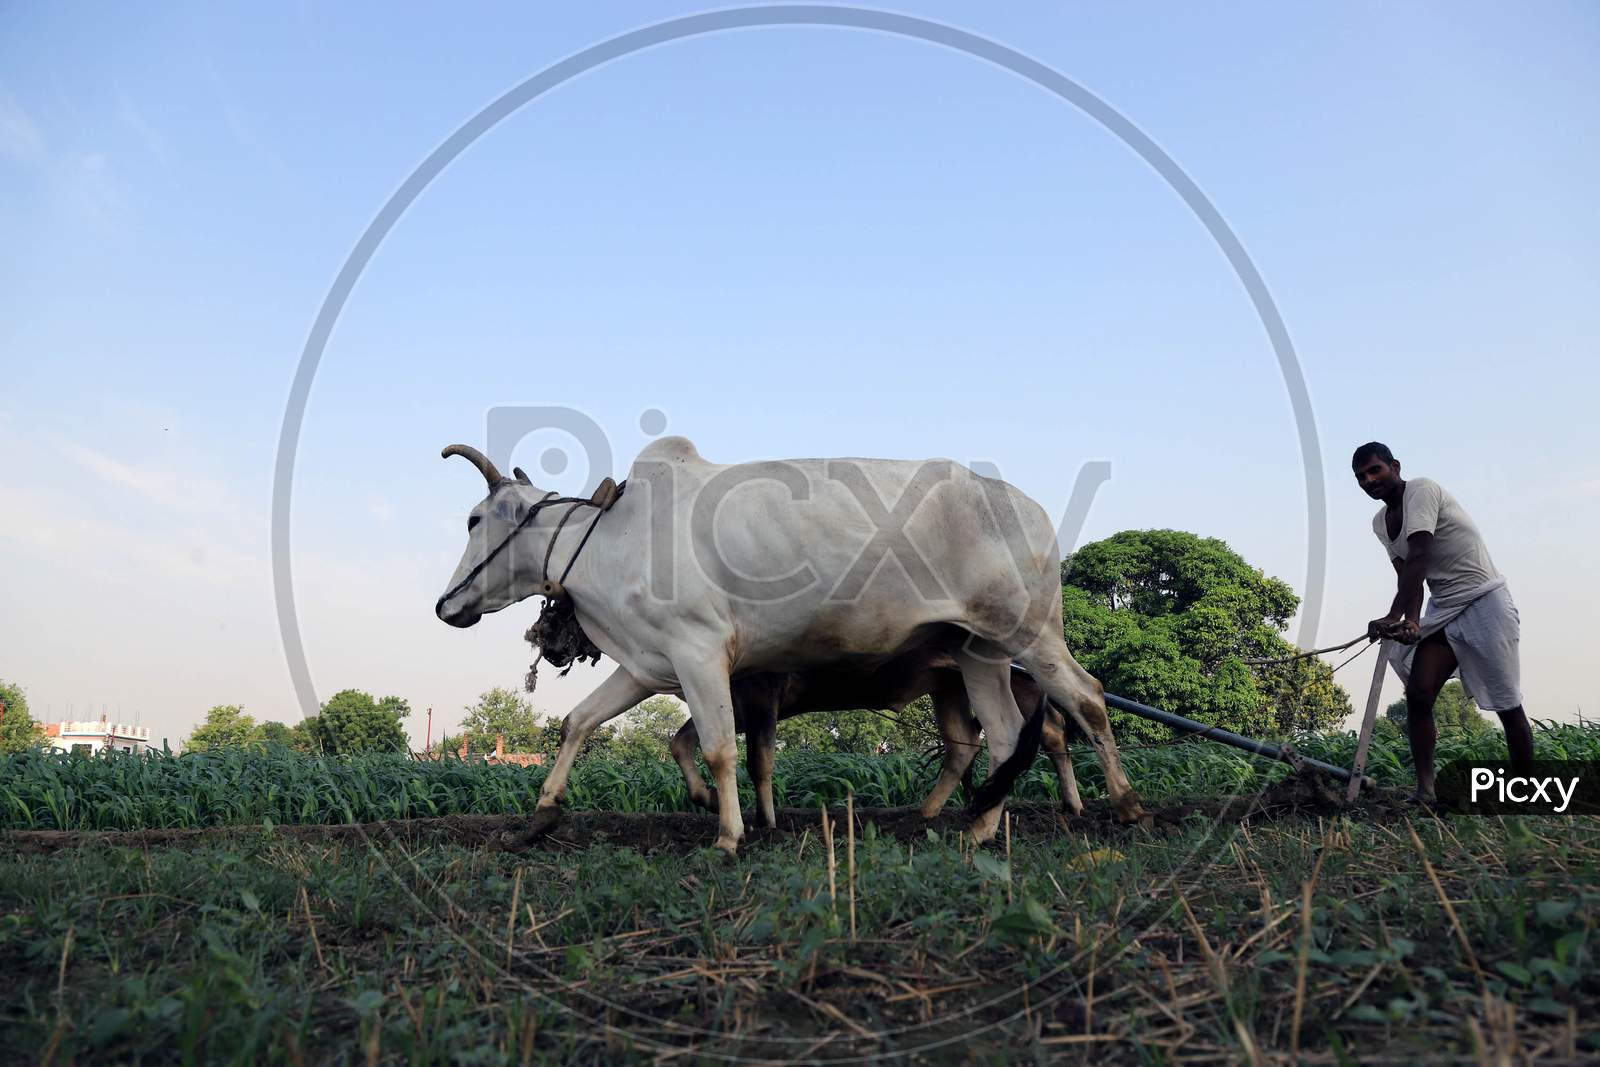 An Indian Farmer Ploughing His Field with Bullocks During Lockdown Time For Corona Virus ( COVID-19) Pandemic in Prayagraj.April 21,2020